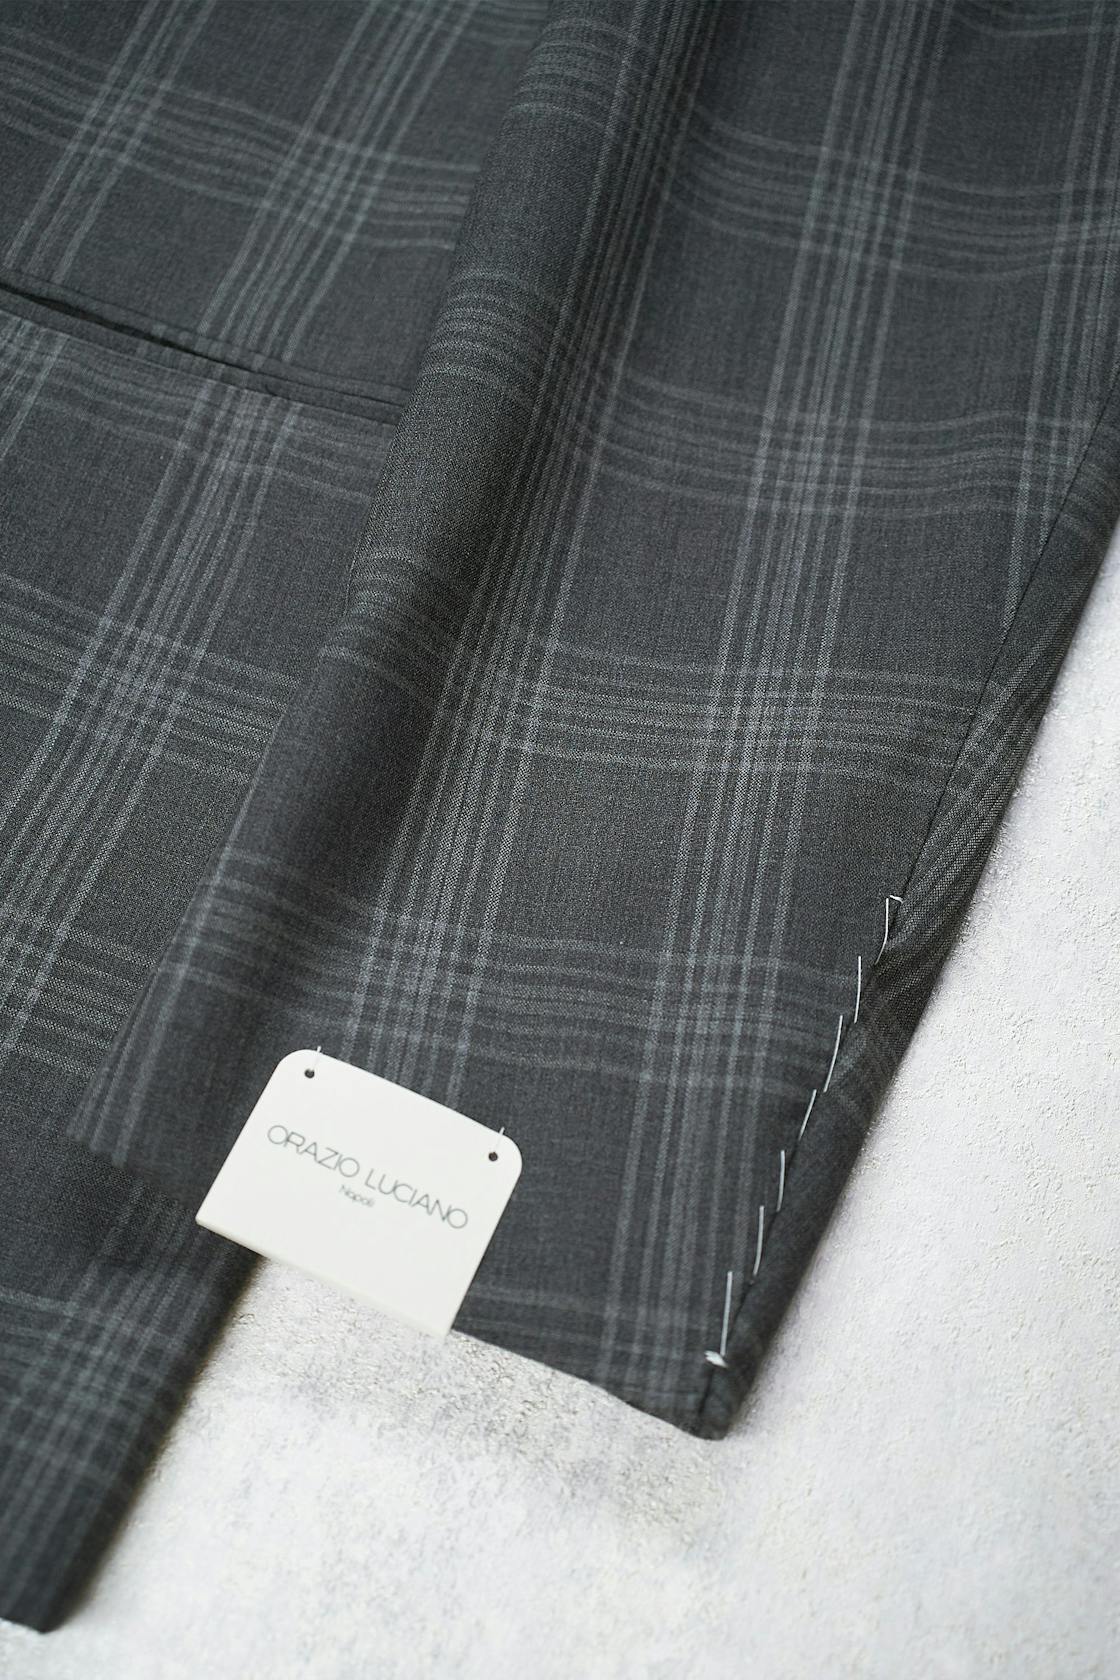 Orazio Luciano Grey Wool Check Suit